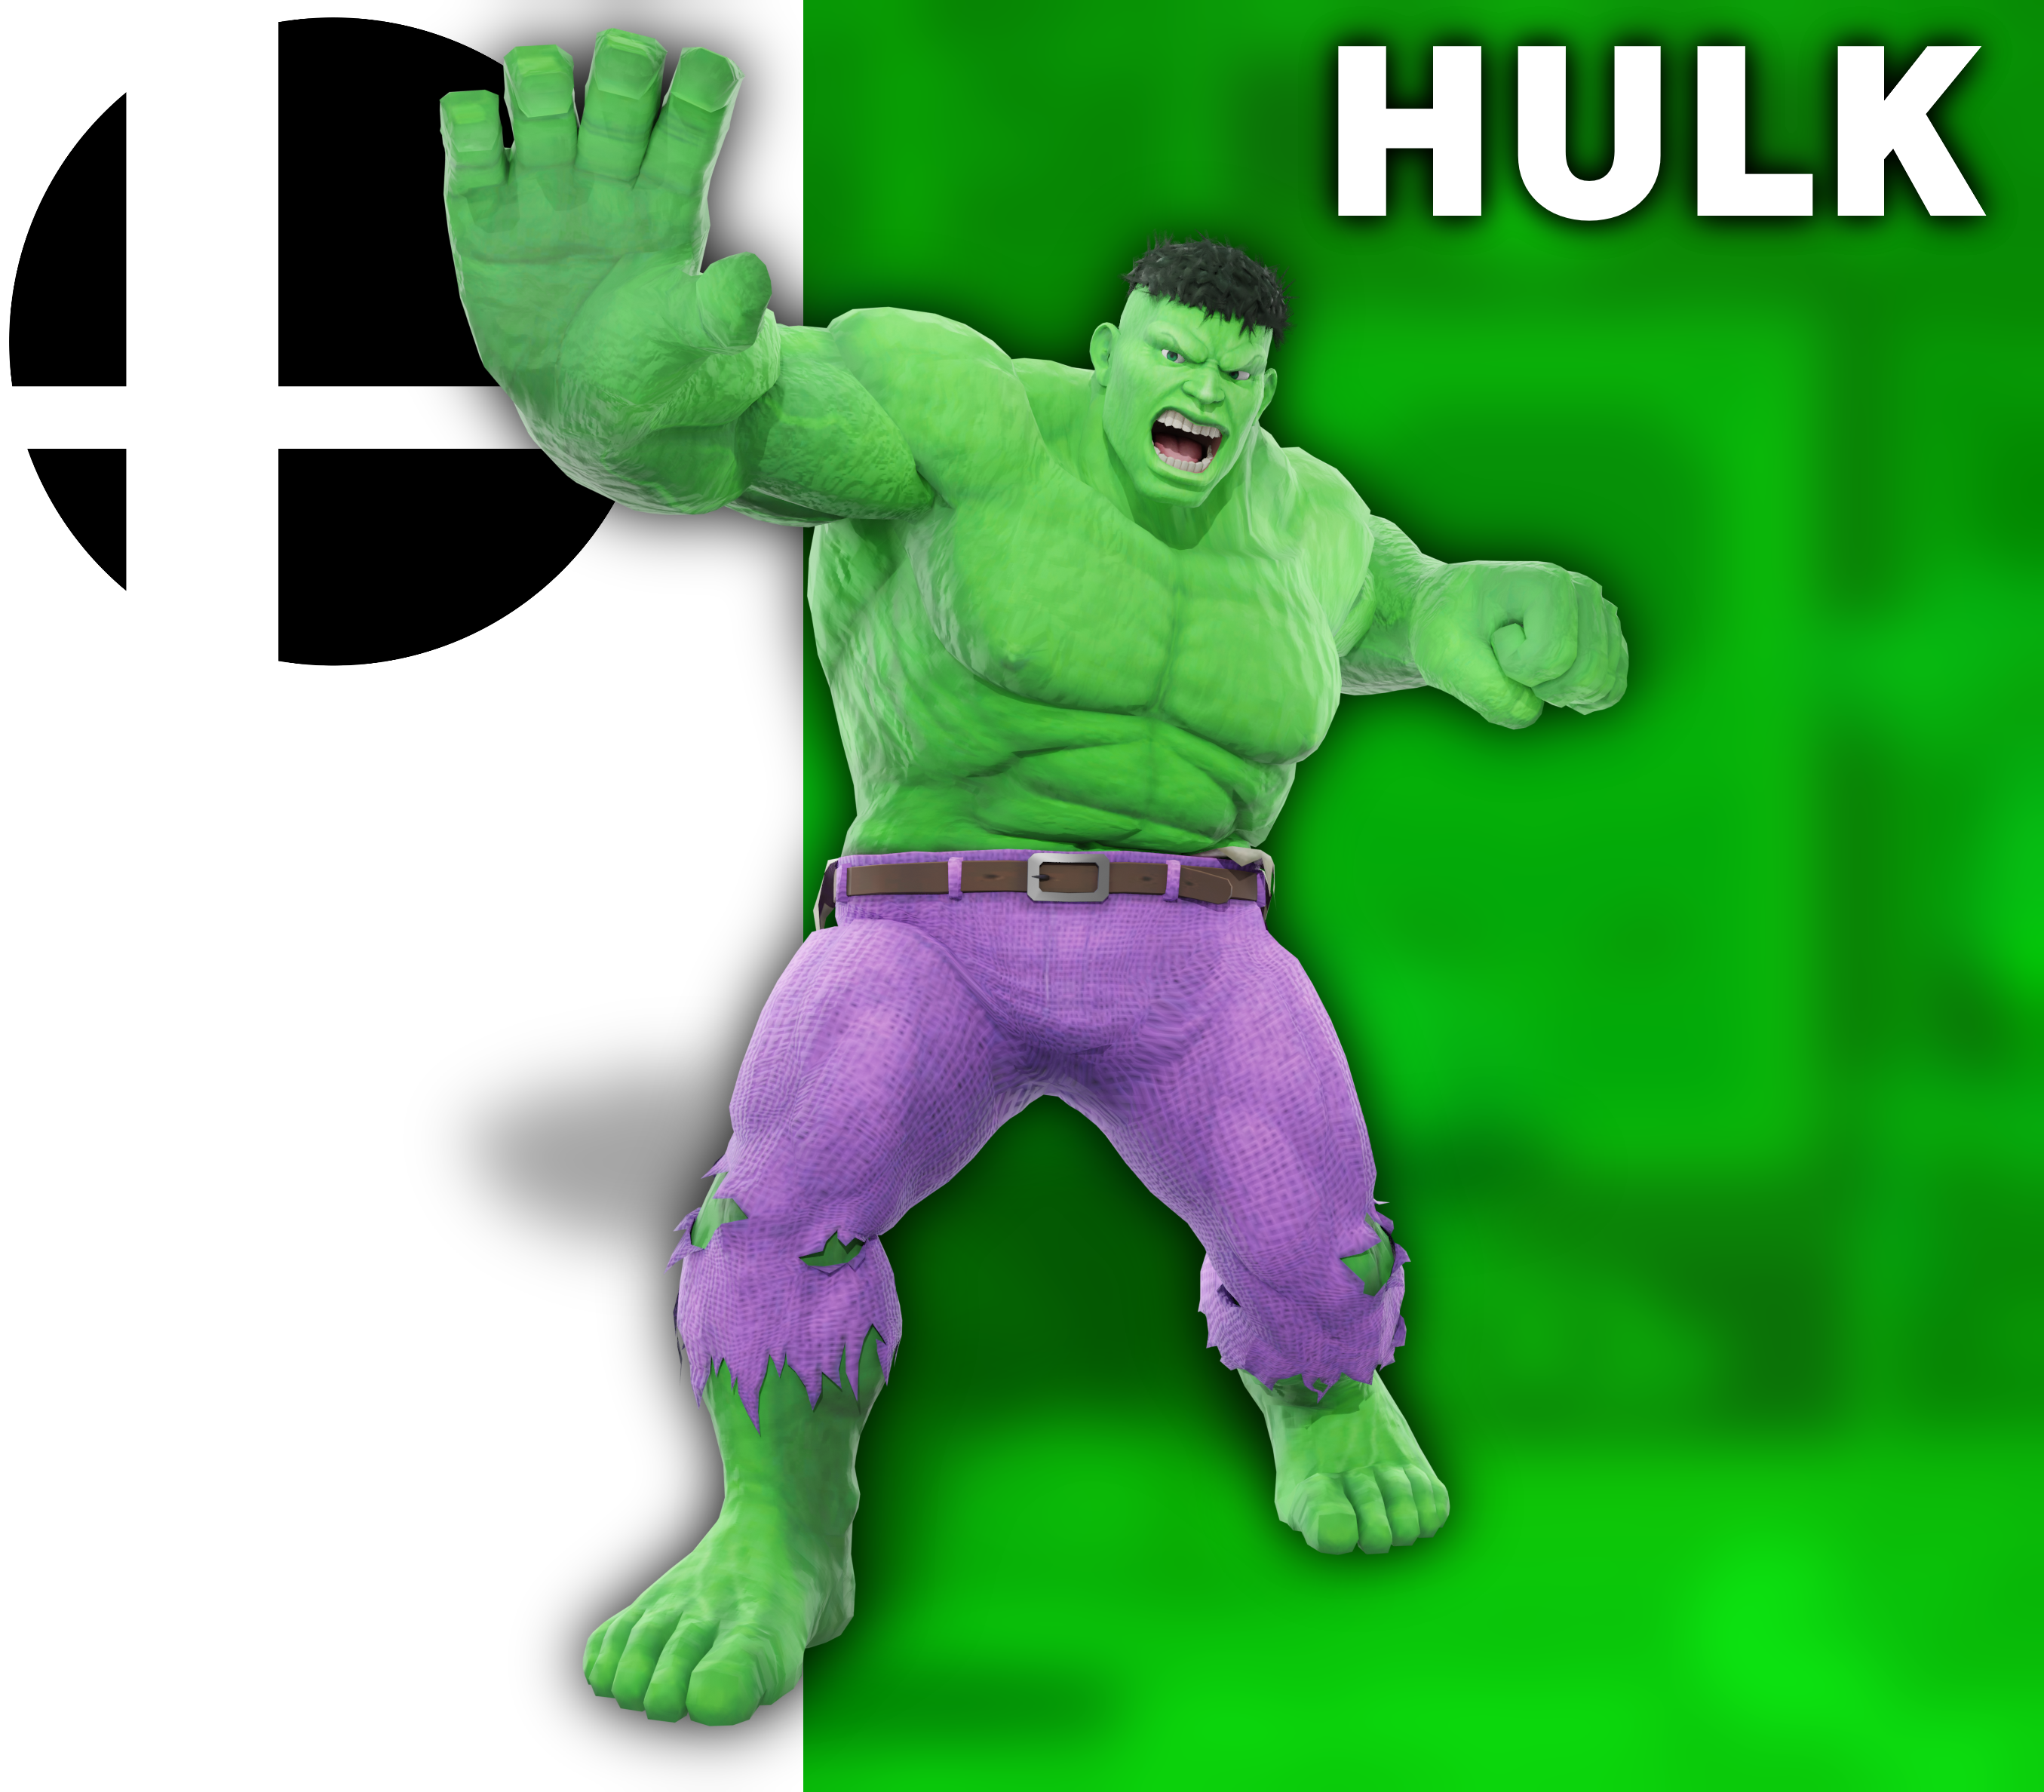 3D Render: Hulk in Smash by MegaMario2001 on DeviantArt